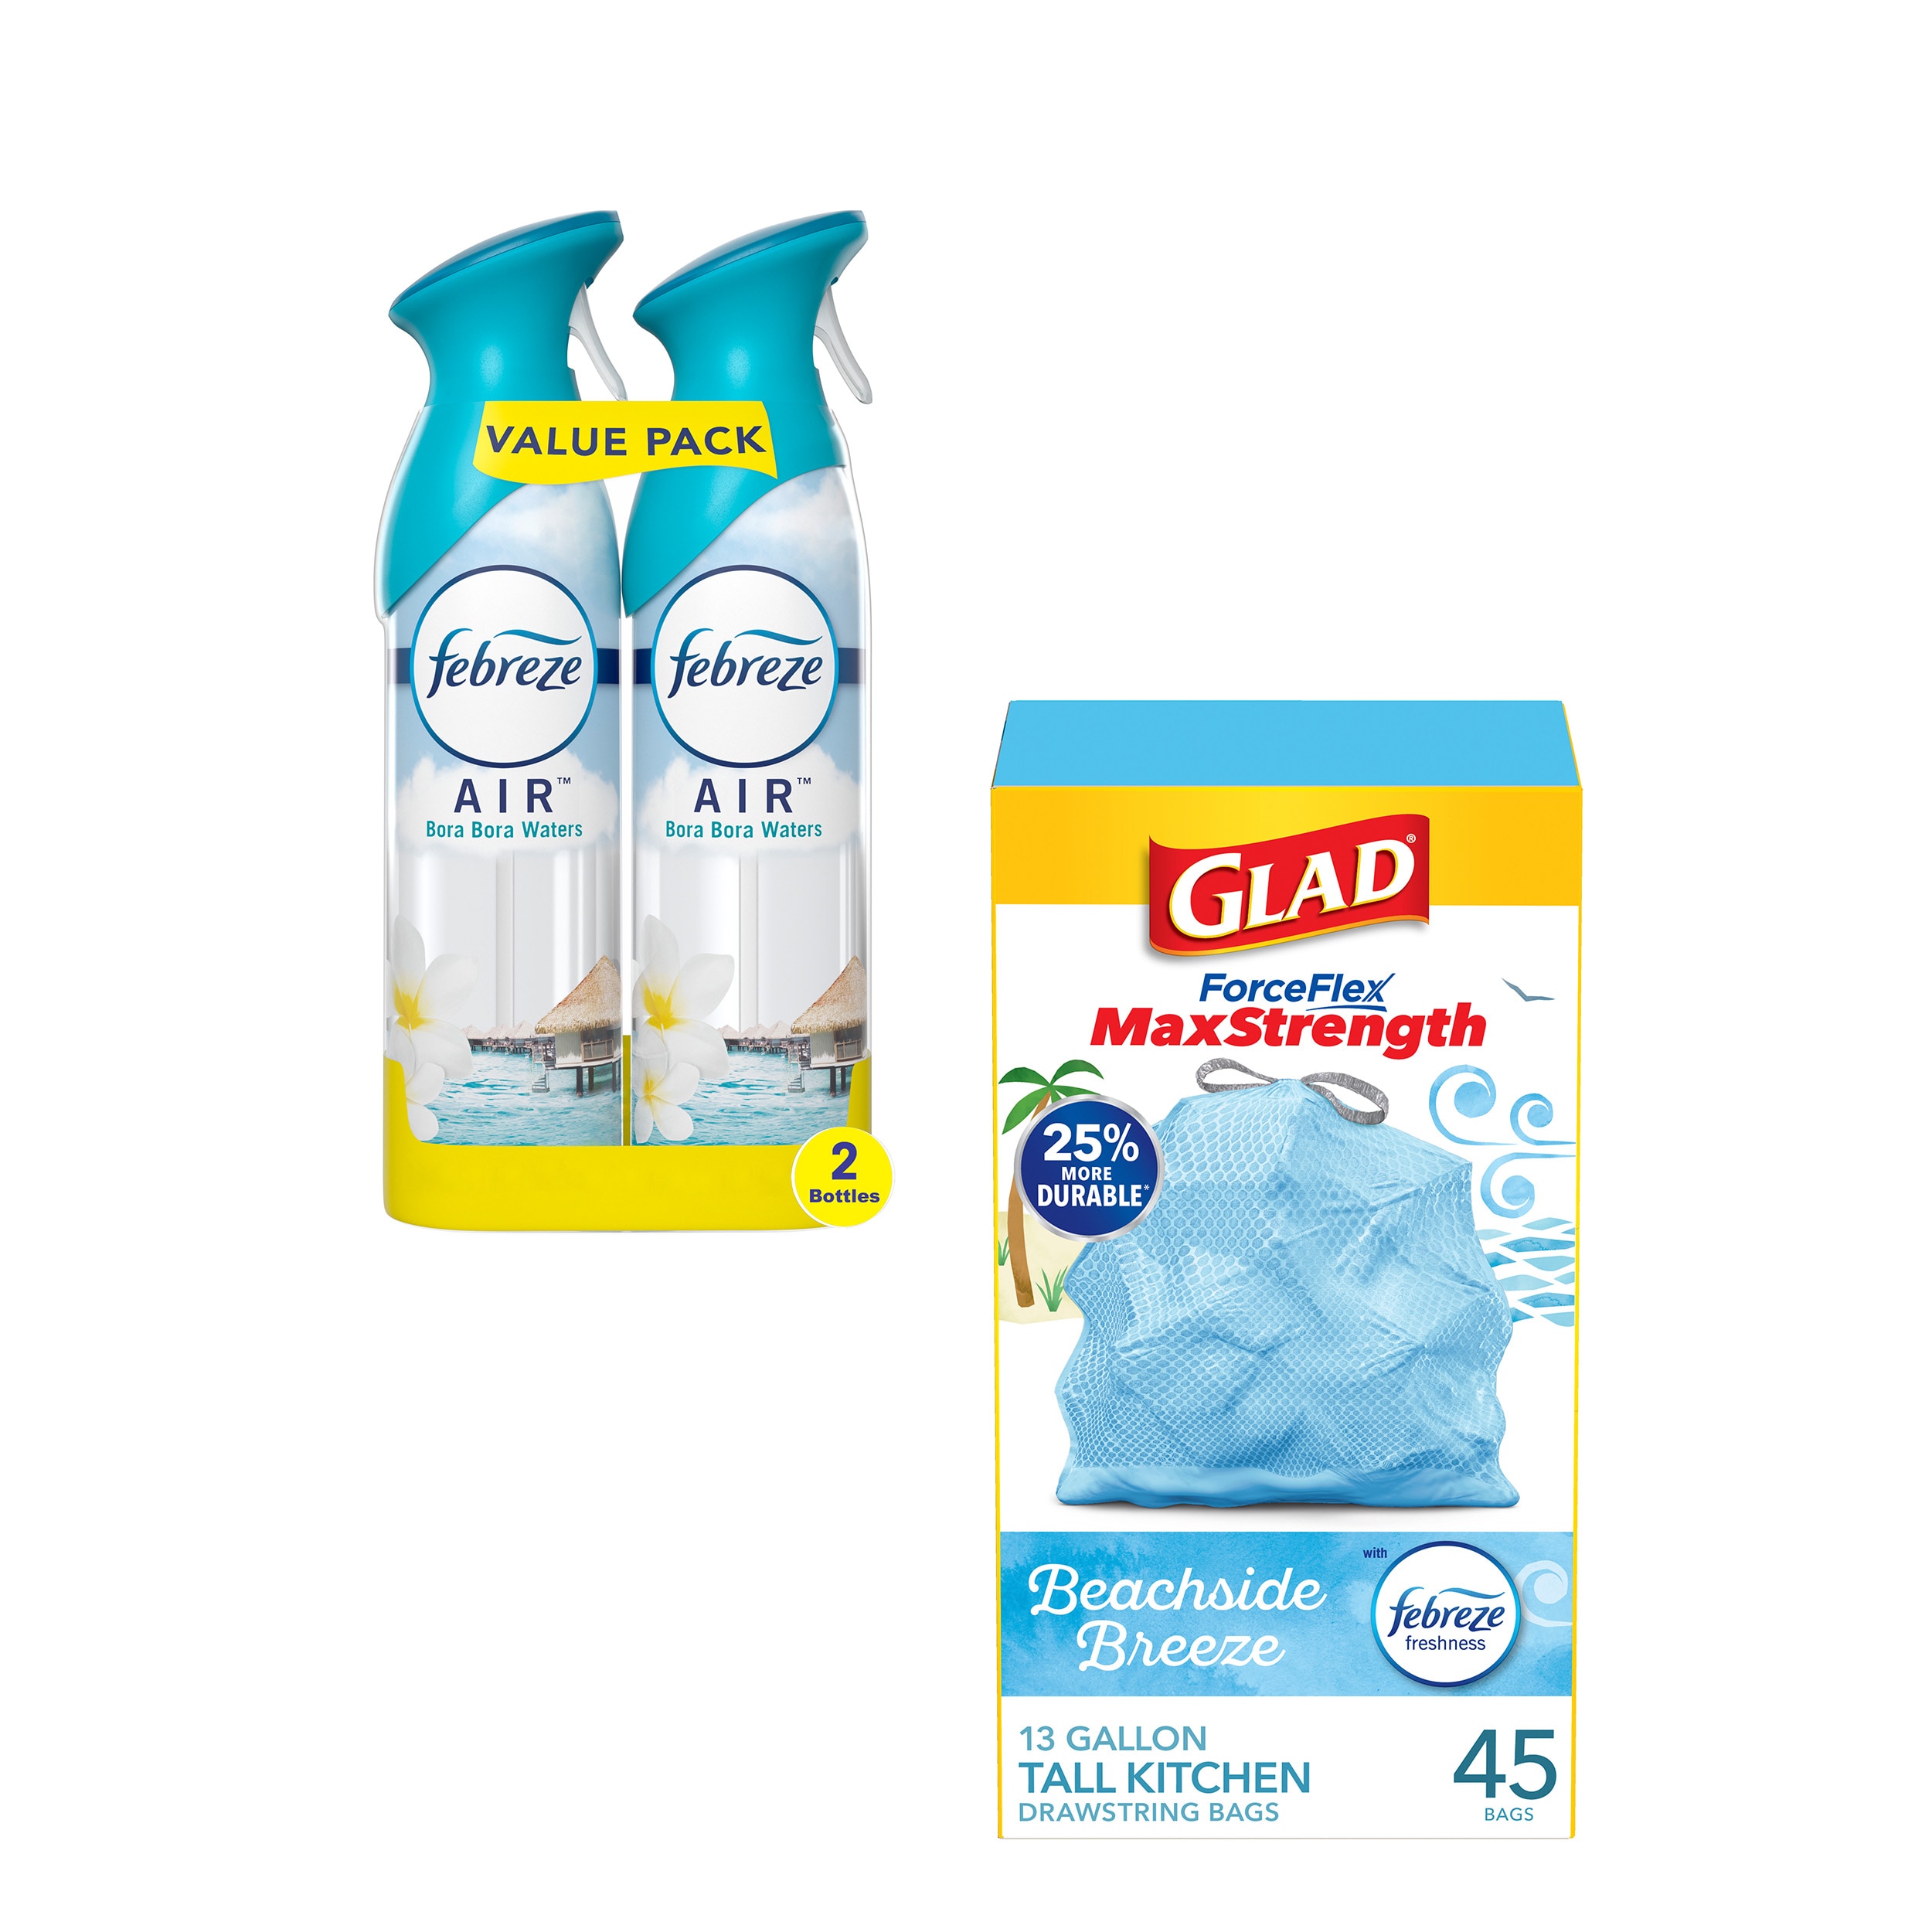 Shop Glad Glad Force Flex Max Strength Trash Bags with Febreze Odor  Eliminator Air Fresheners, Beachside Breeze at